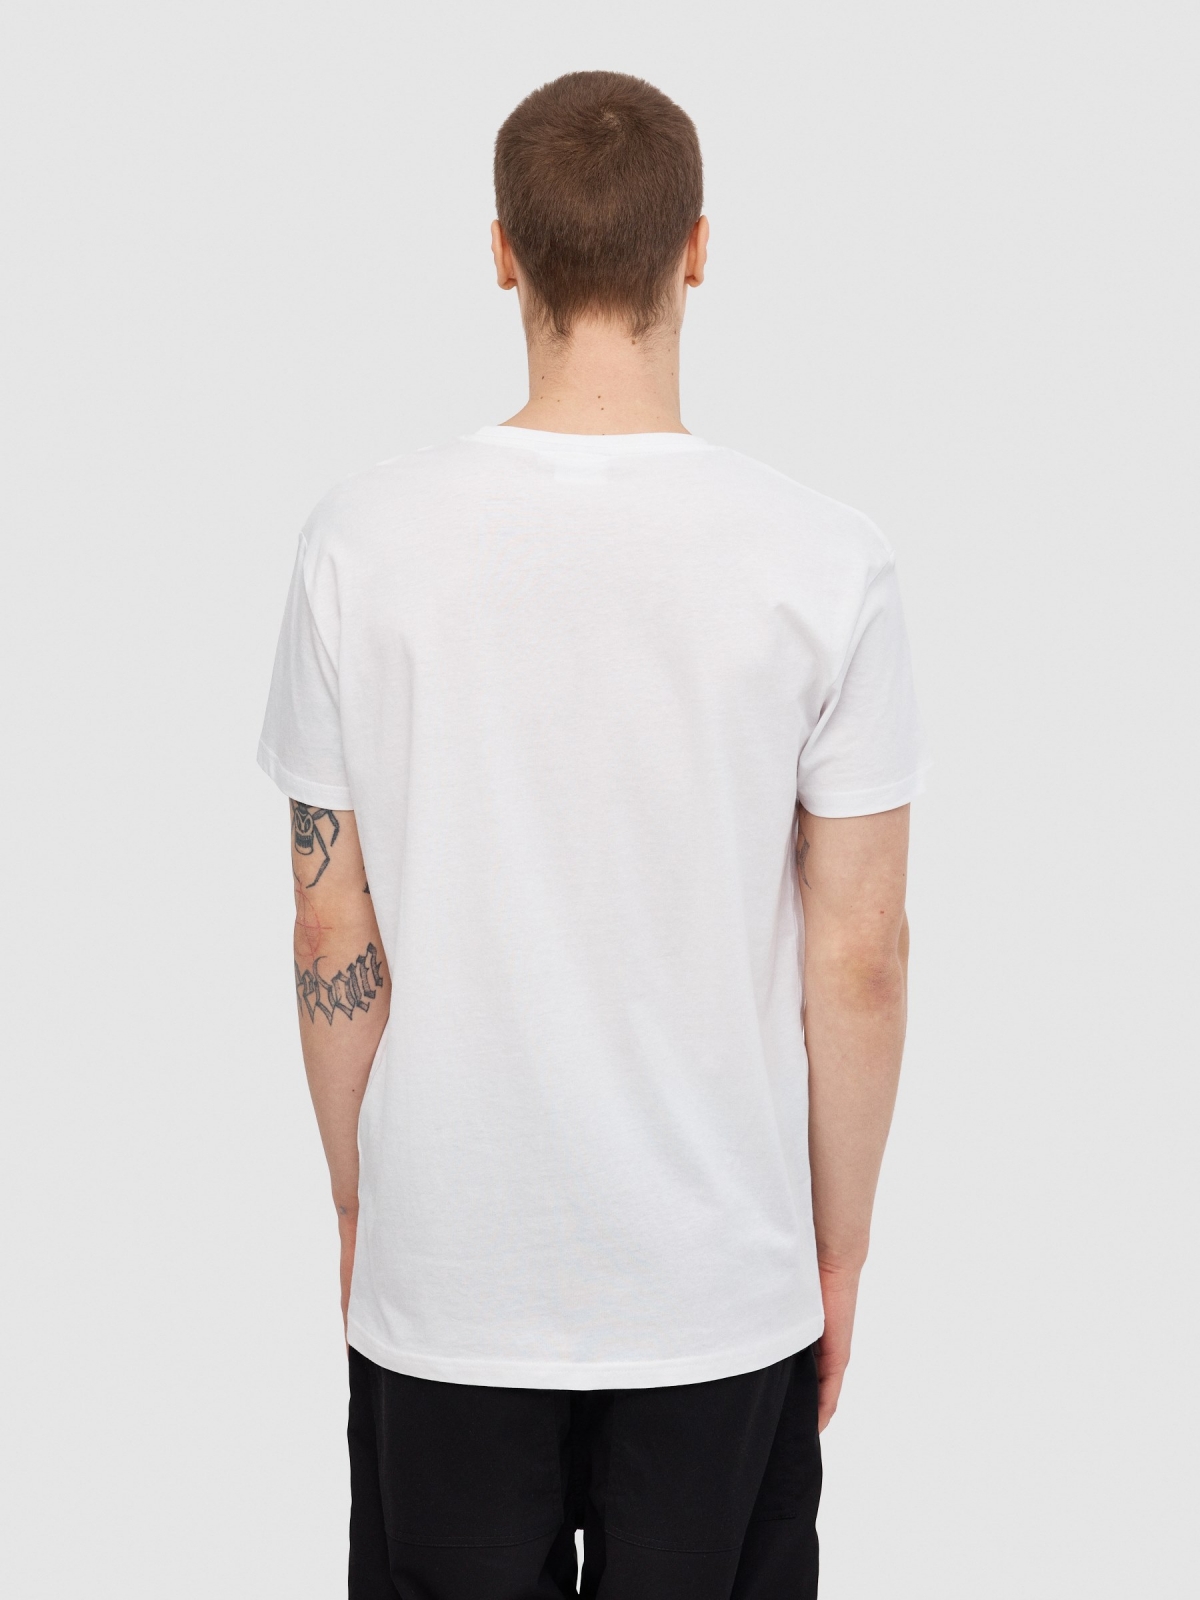 Dragon Ball Super t-shirt white middle back view